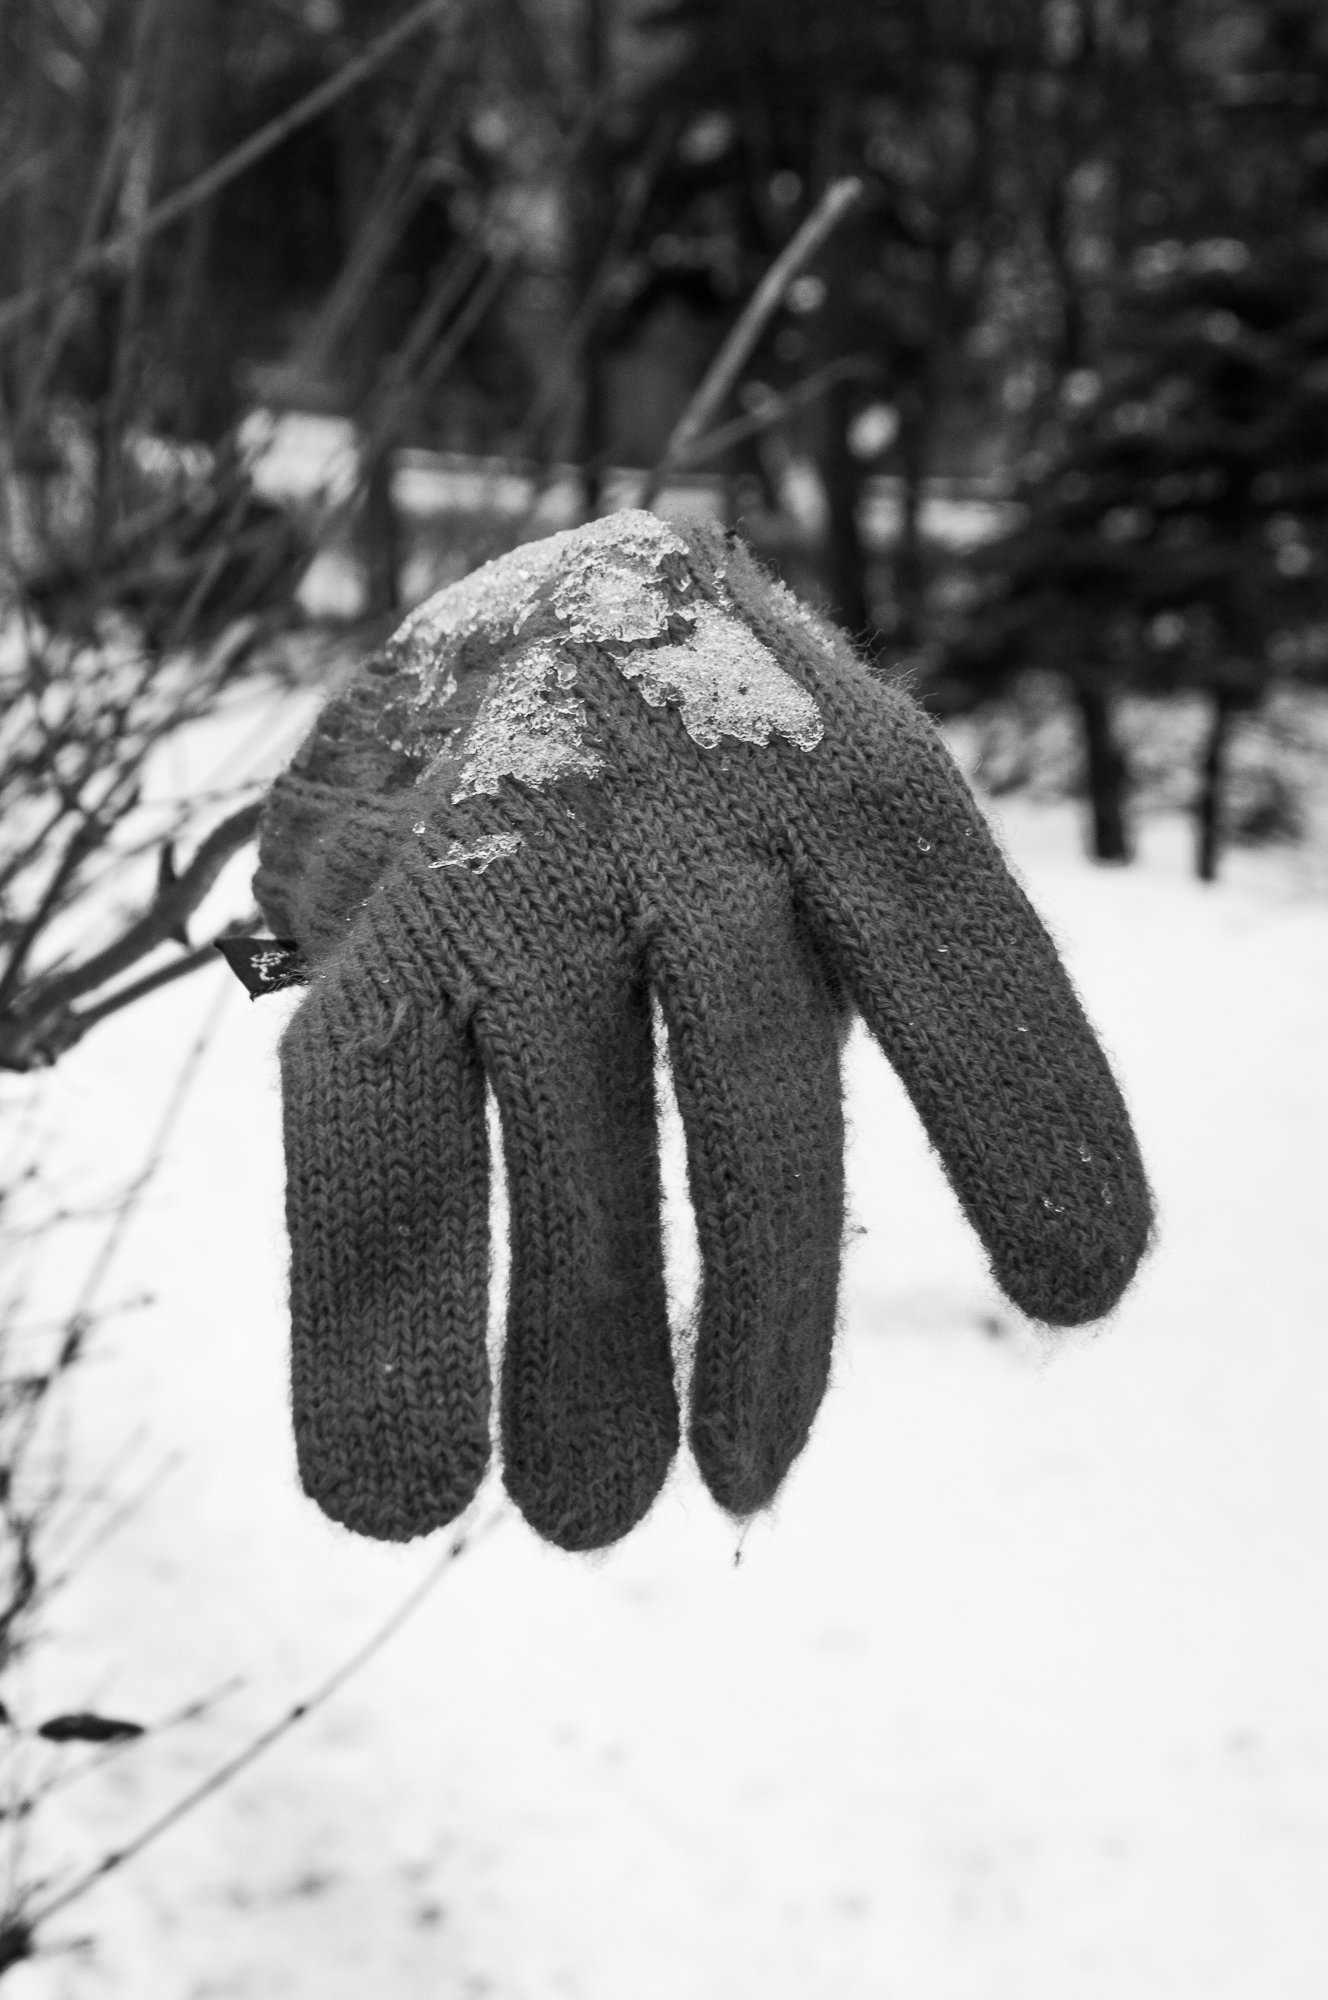 Adam Mazek Photography Warsaw (Warszawa) 2019. Post: "Wrist pain." Minimalism. Gloves. Hand.